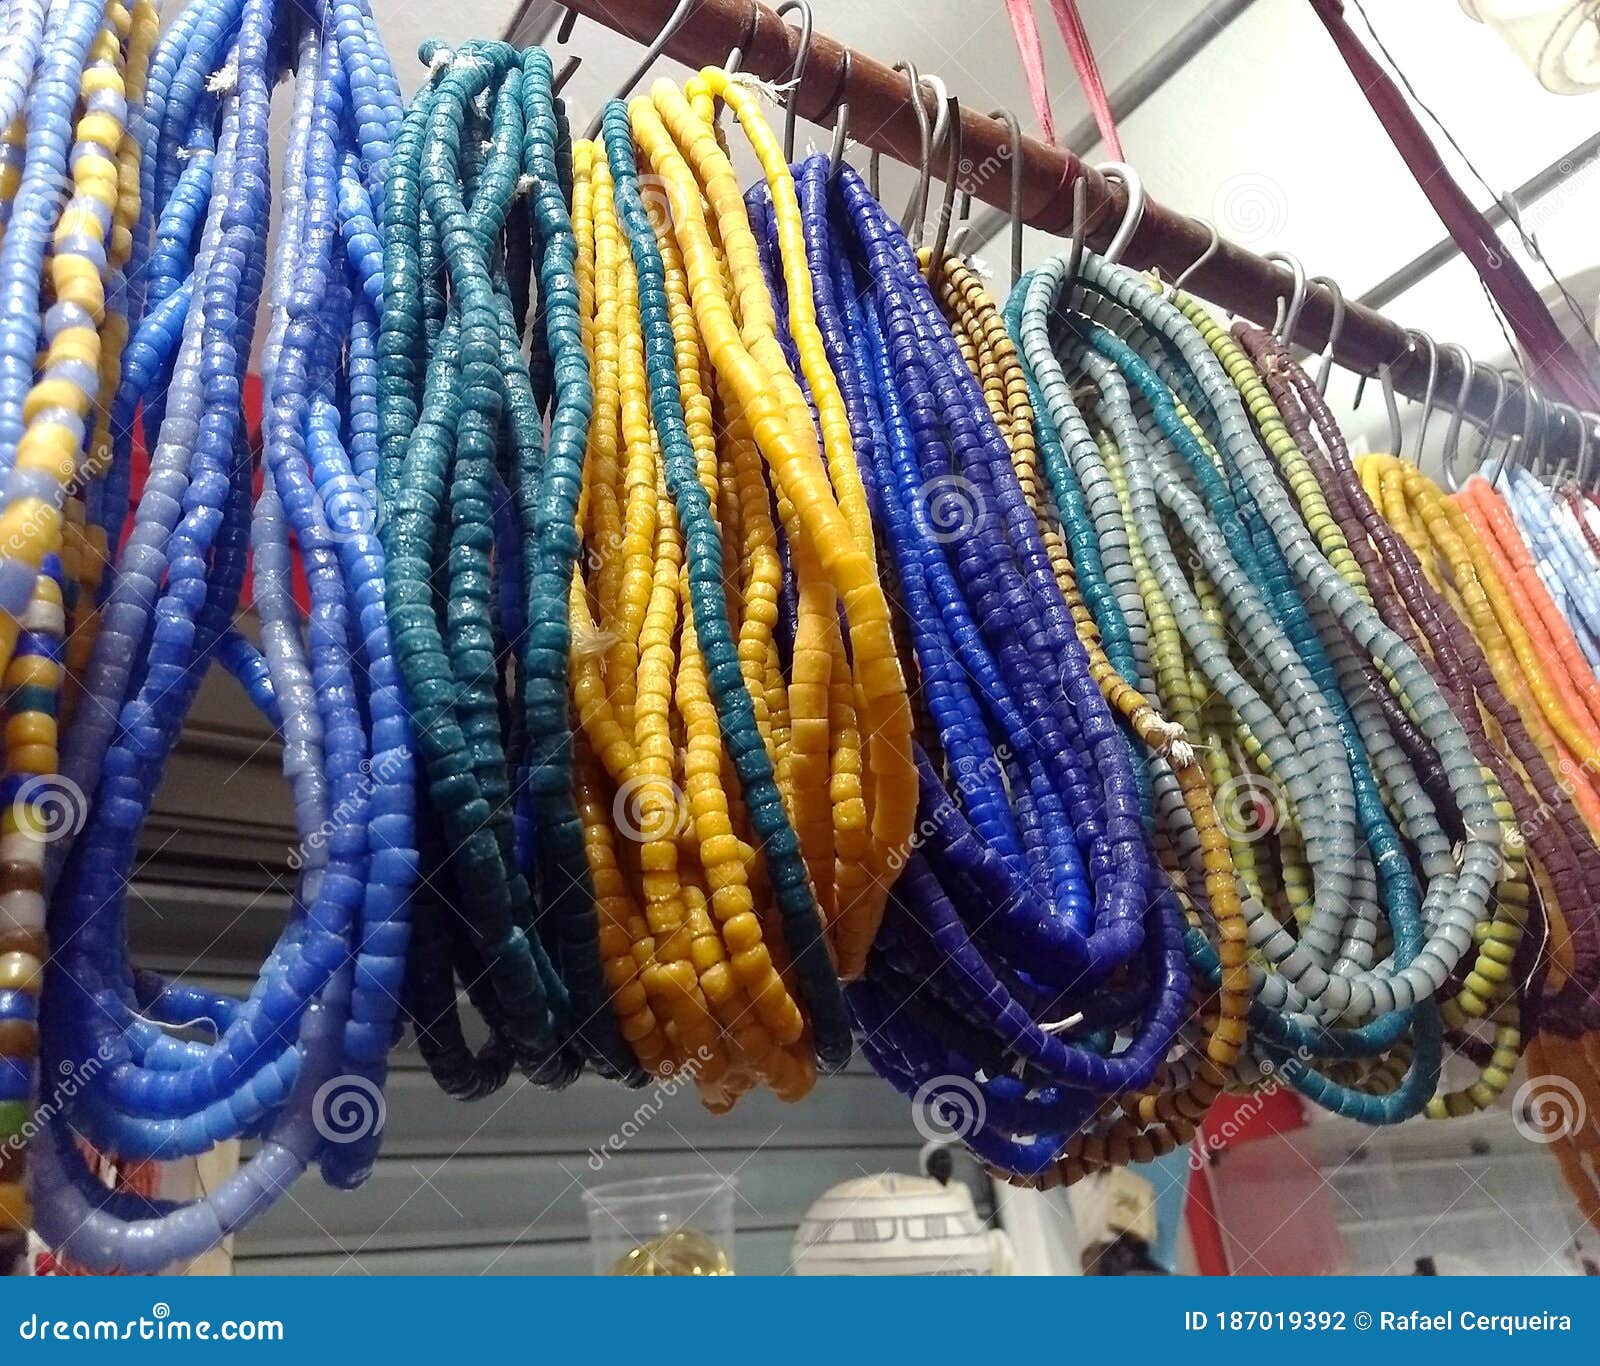 orixÃÂ¡s guide necklace on a clothesline - colored guides